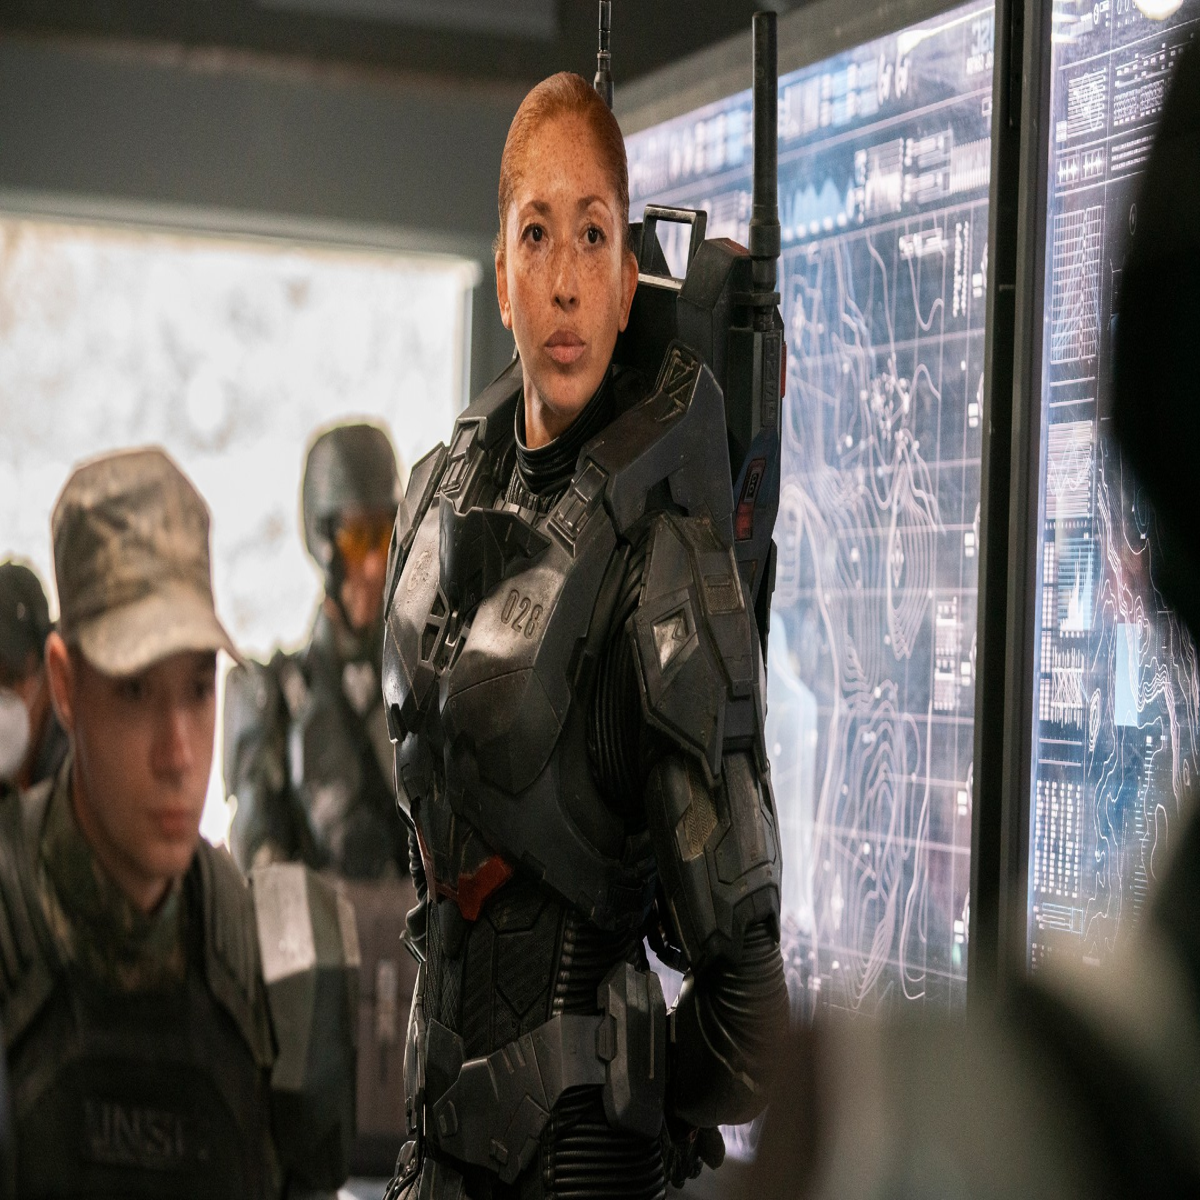 Halo TV Series Already Renewed for a Second Season